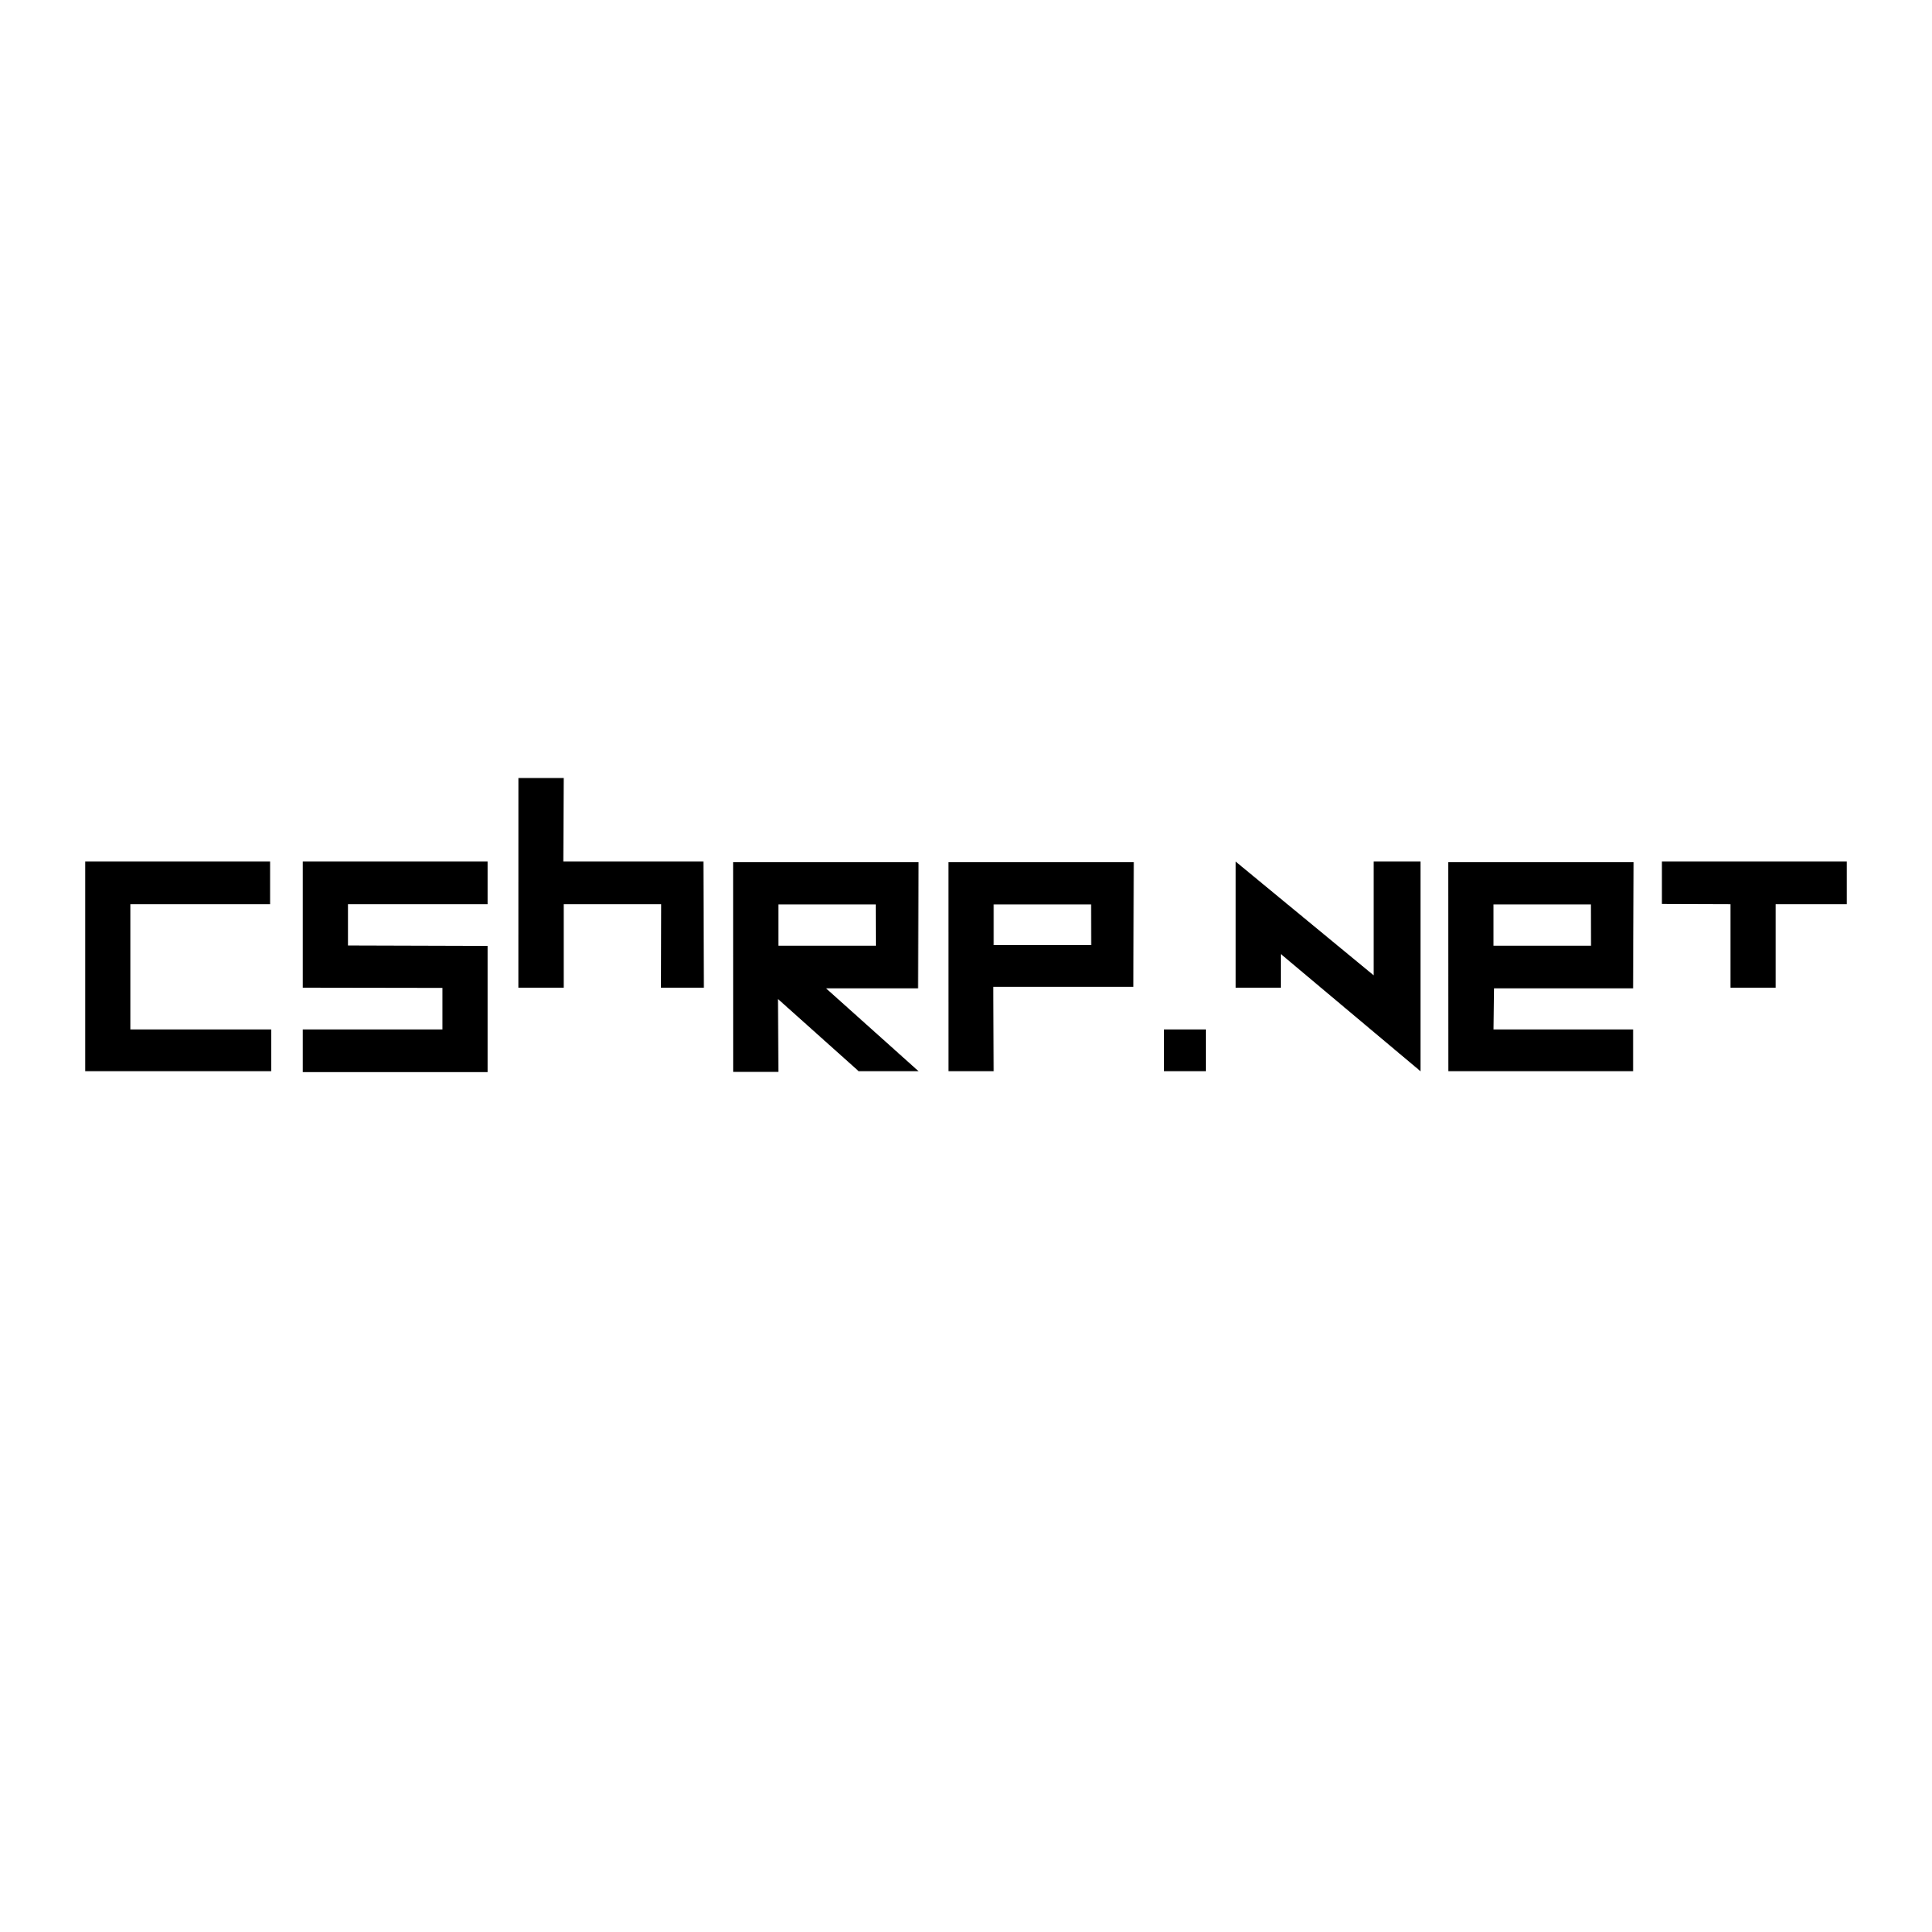 C Sharp Logo - Csharp Logo PNG Transparent & SVG Vector - Freebie Supply